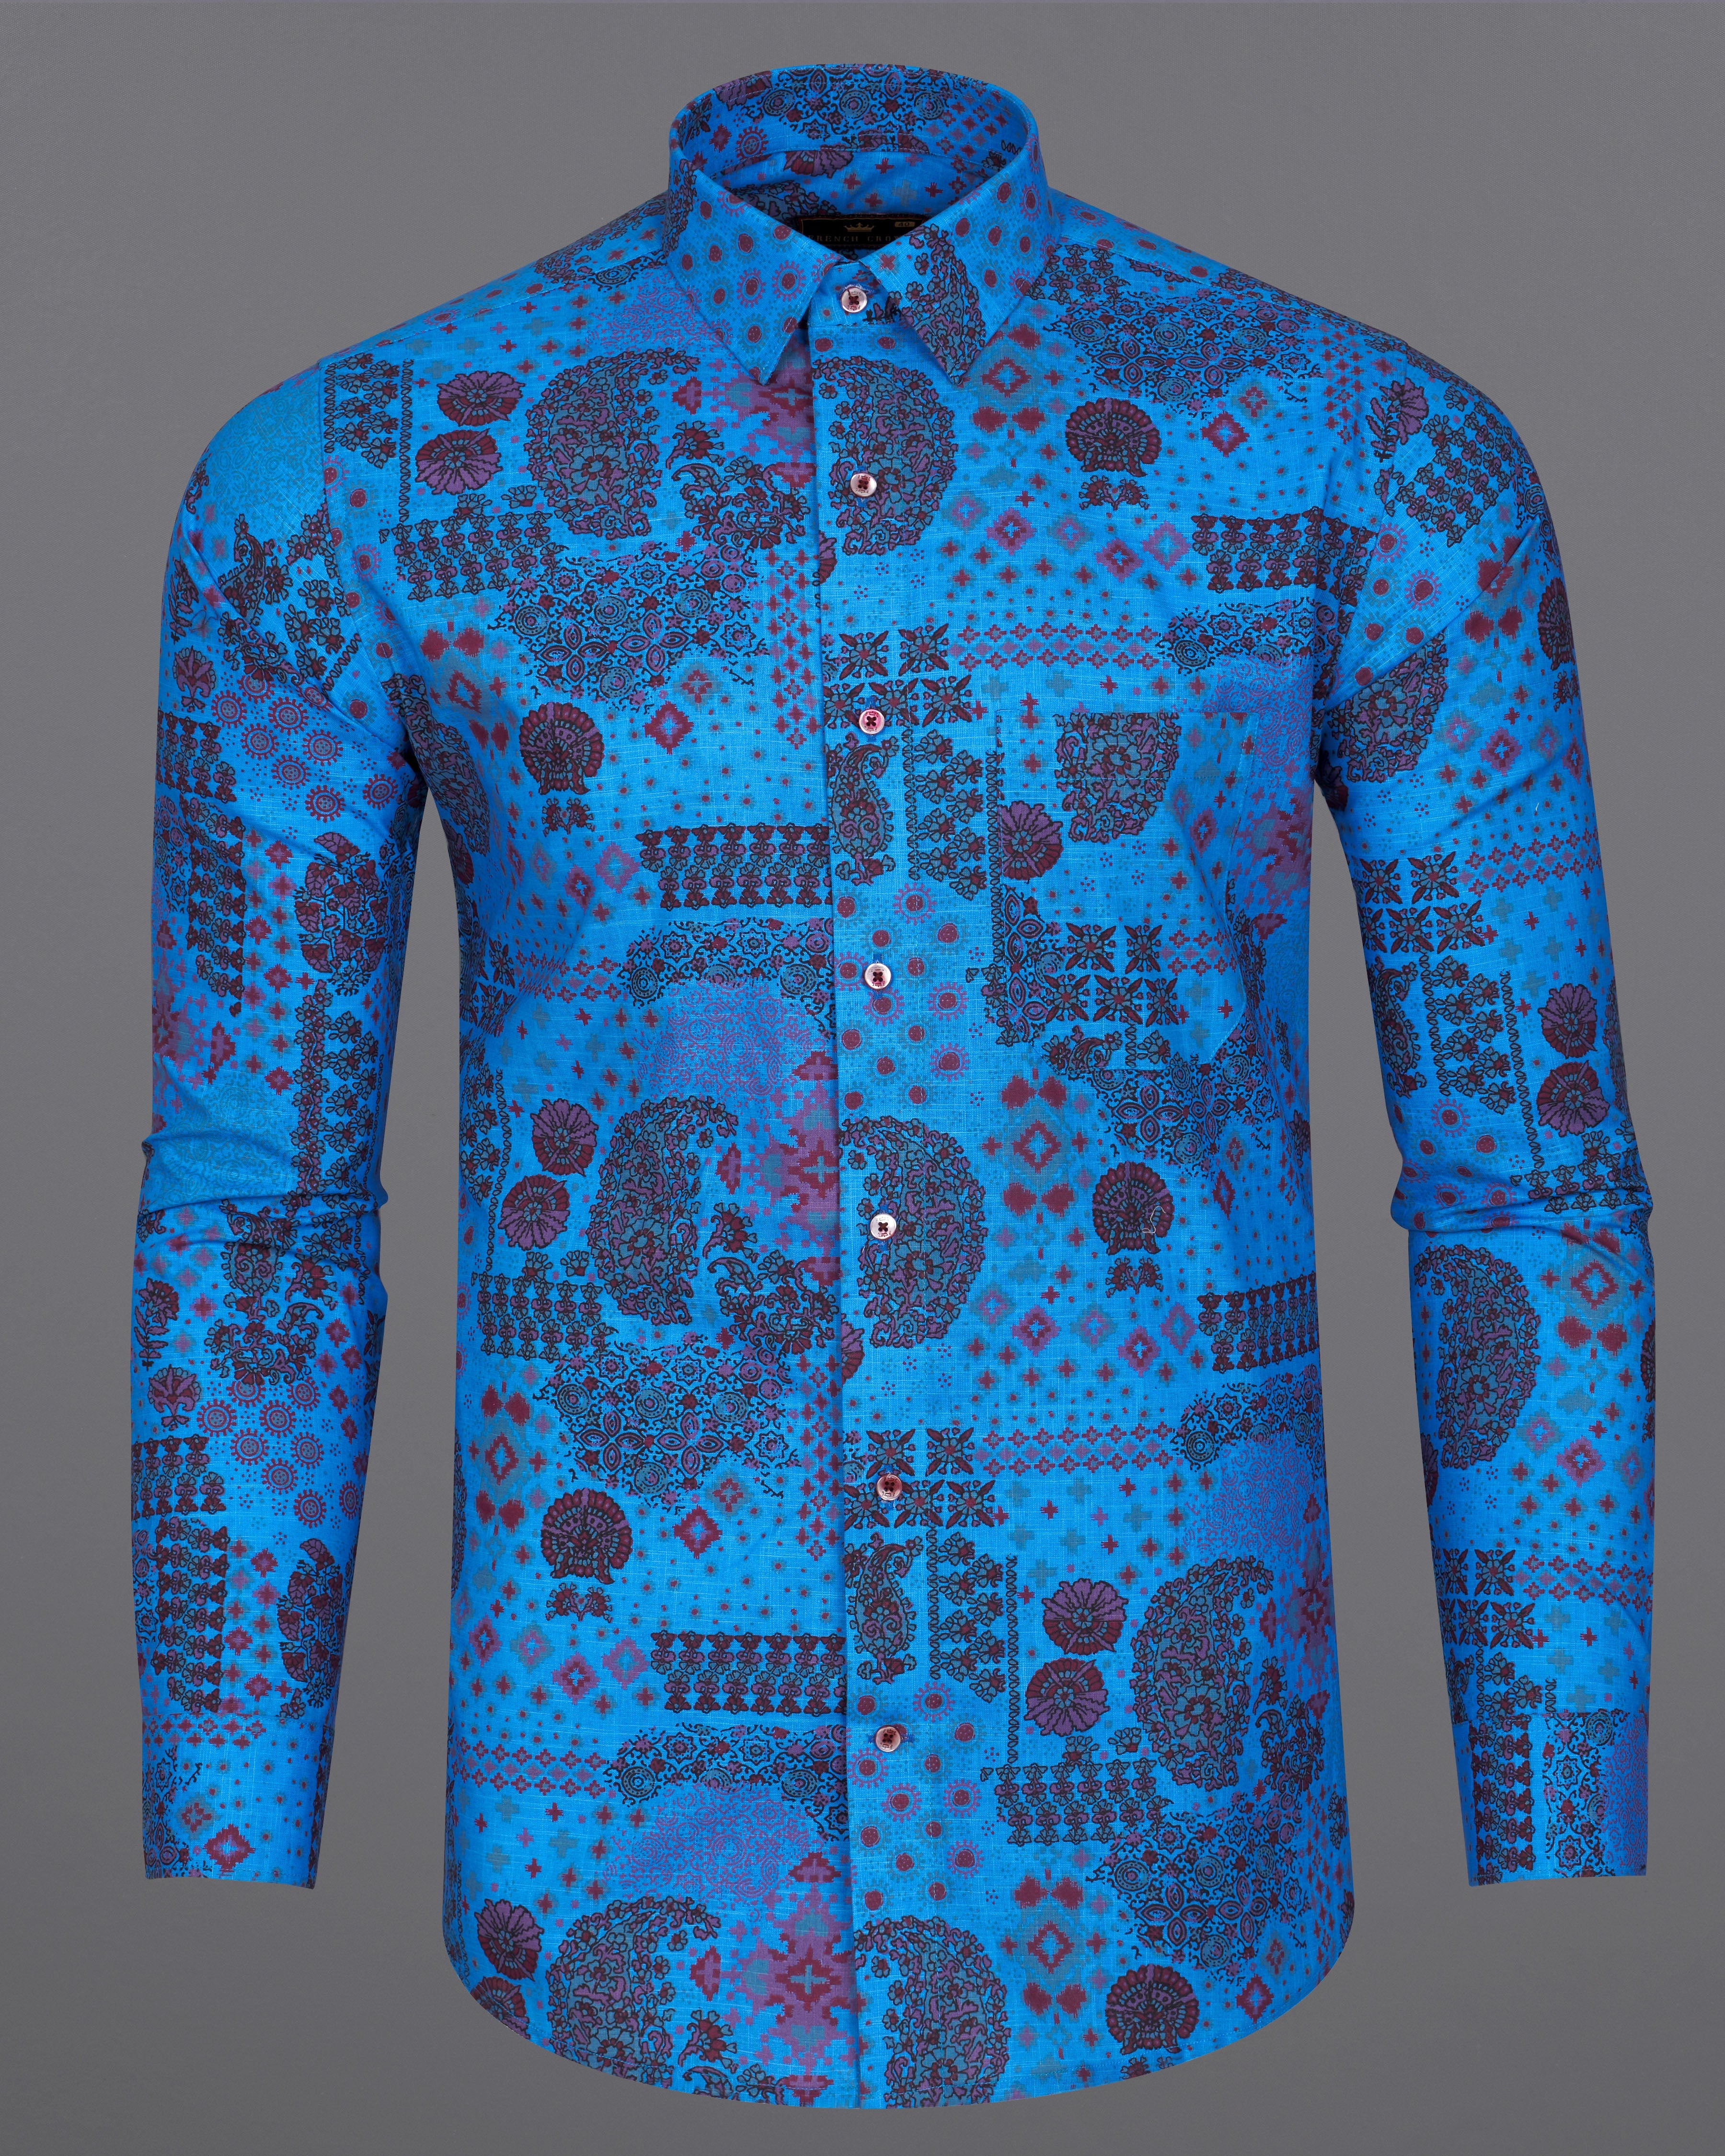 Curious Blue with Multicolour Banjara Printed Royal Oxford Shirt 9301-MN-38,9301-MN-H-38,9301-MN-39,9301-MN-H-39,9301-MN-40,9301-MN-H-40,9301-MN-42,9301-MN-H-42,9301-MN-44,9301-MN-H-44,9301-MN-46,9301-MN-H-46,9301-MN-48,9301-MN-H-48,9301-MN-50,9301-MN-H-50,9301-MN-52,9301-MN-H-52